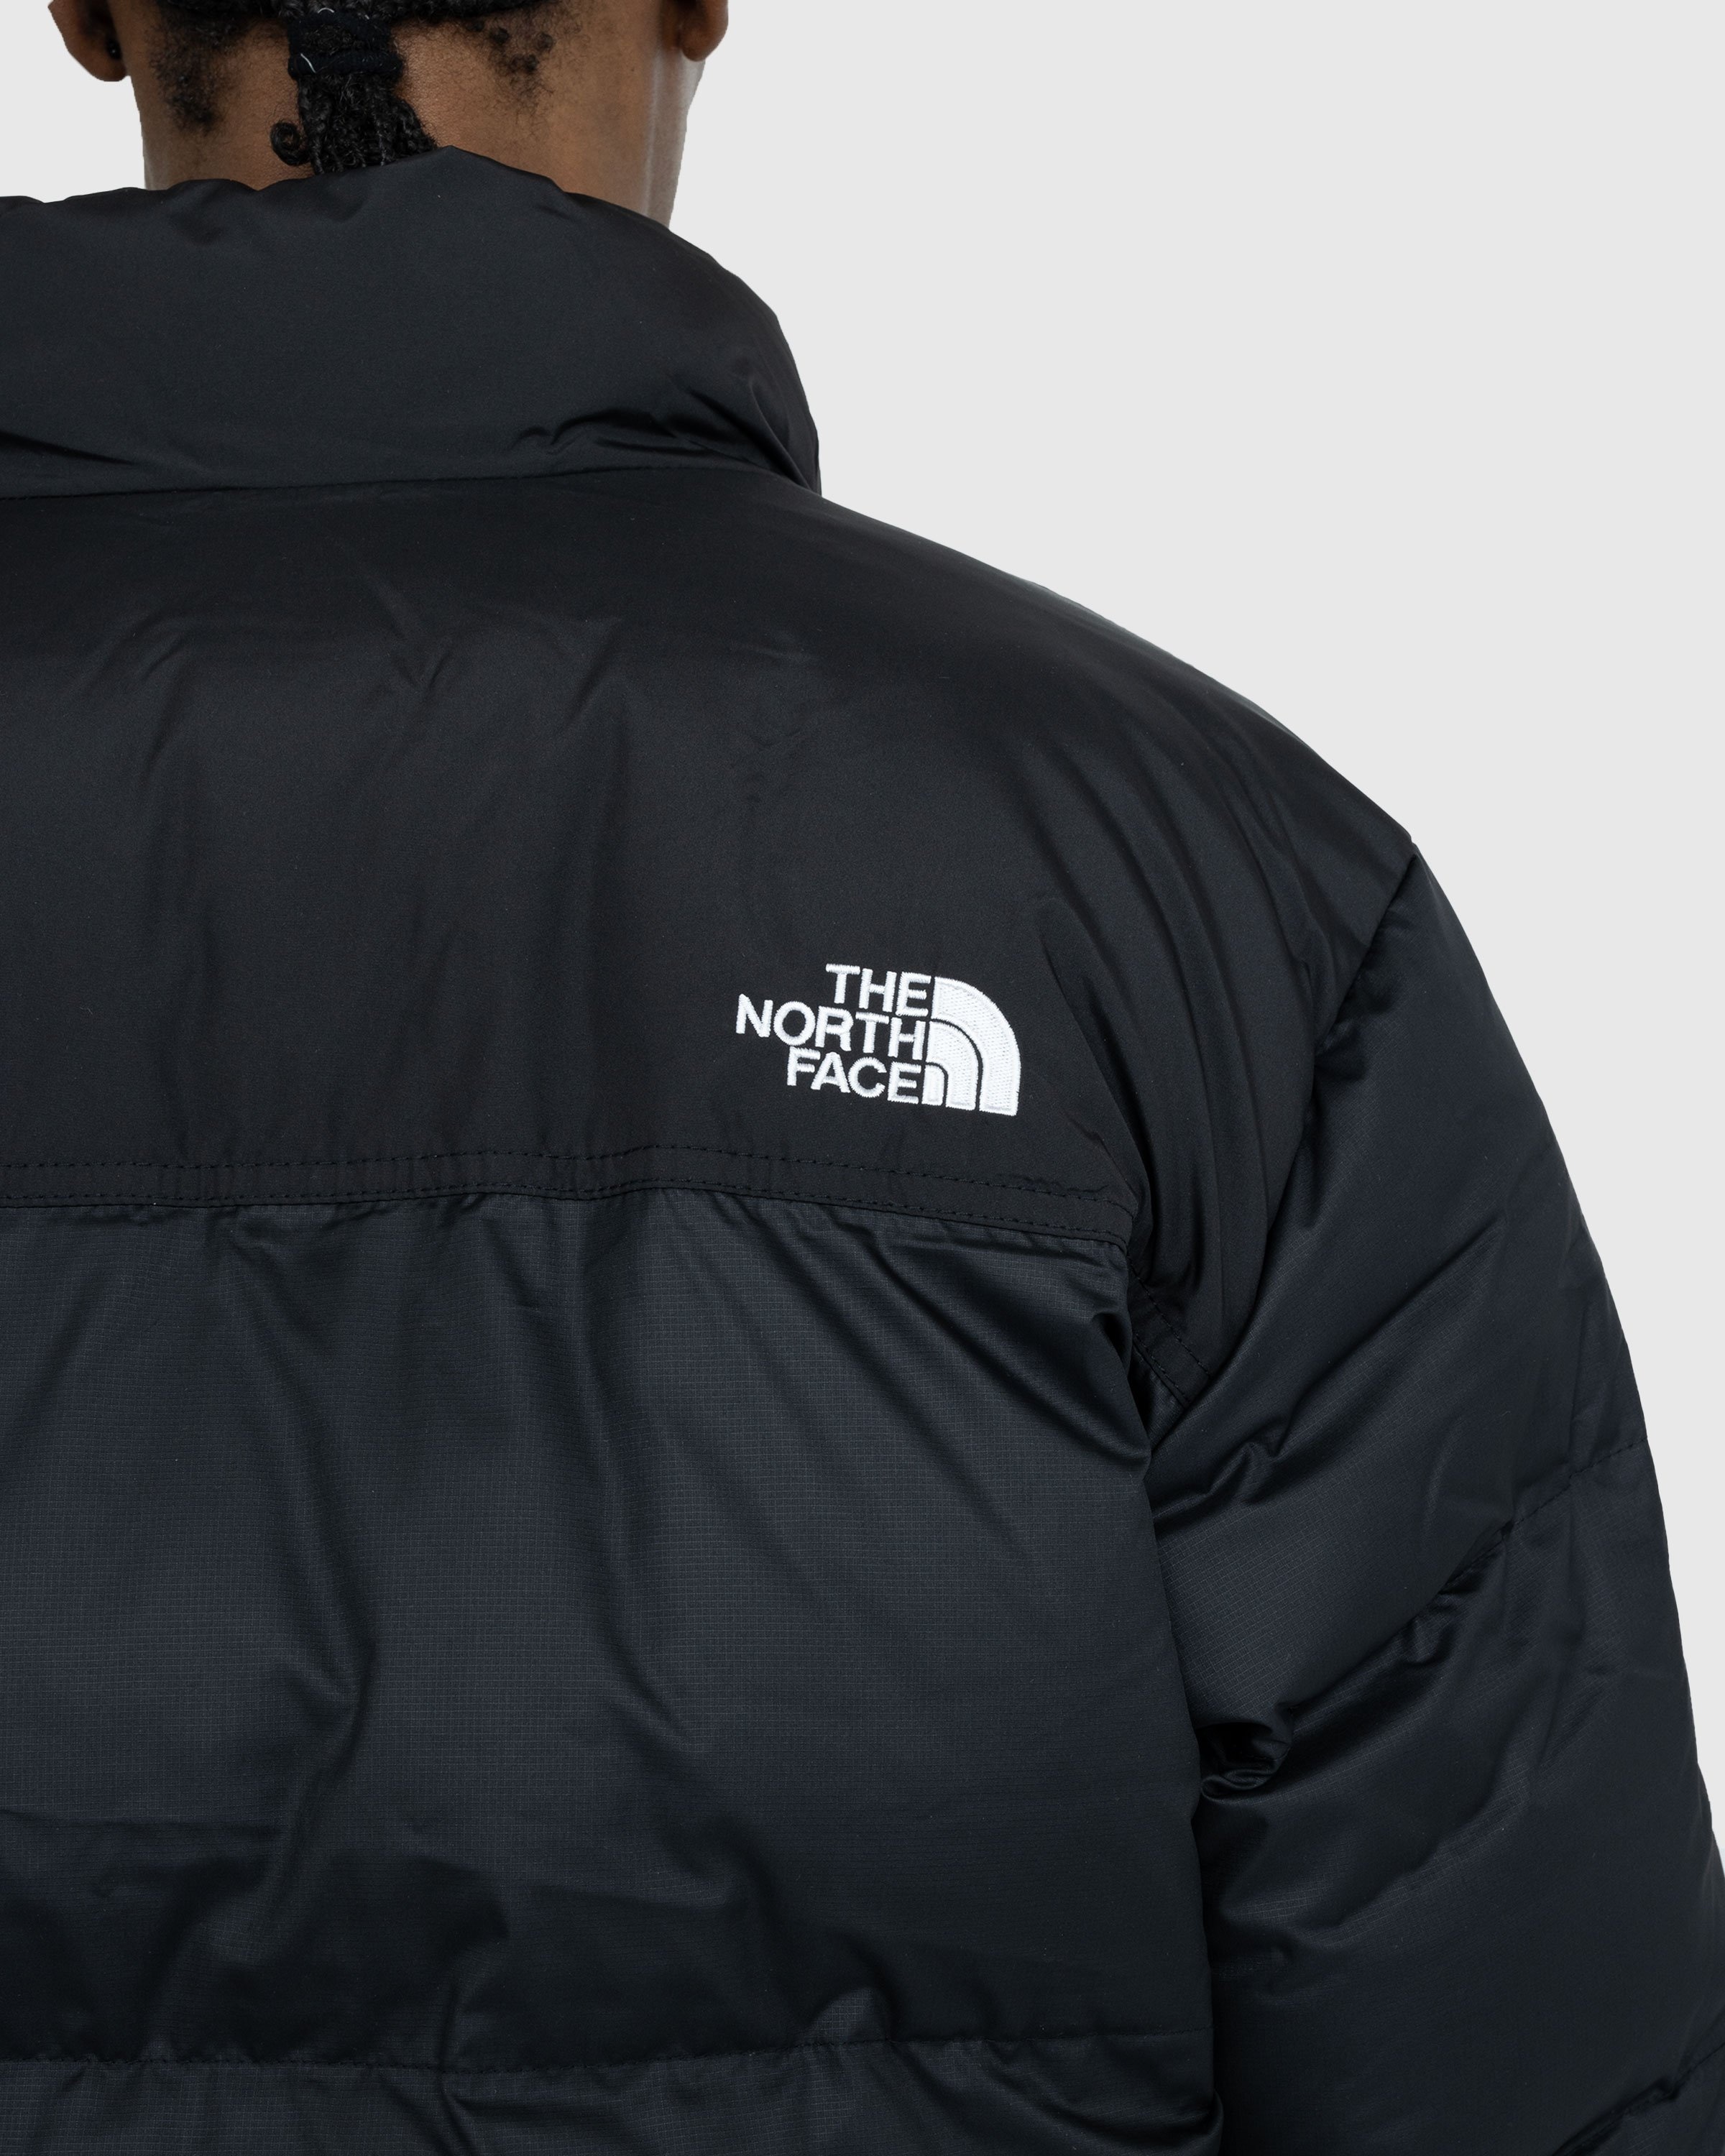 The North Face – Saikuru Jacket TNF Black - Outerwear - Black - Image 5